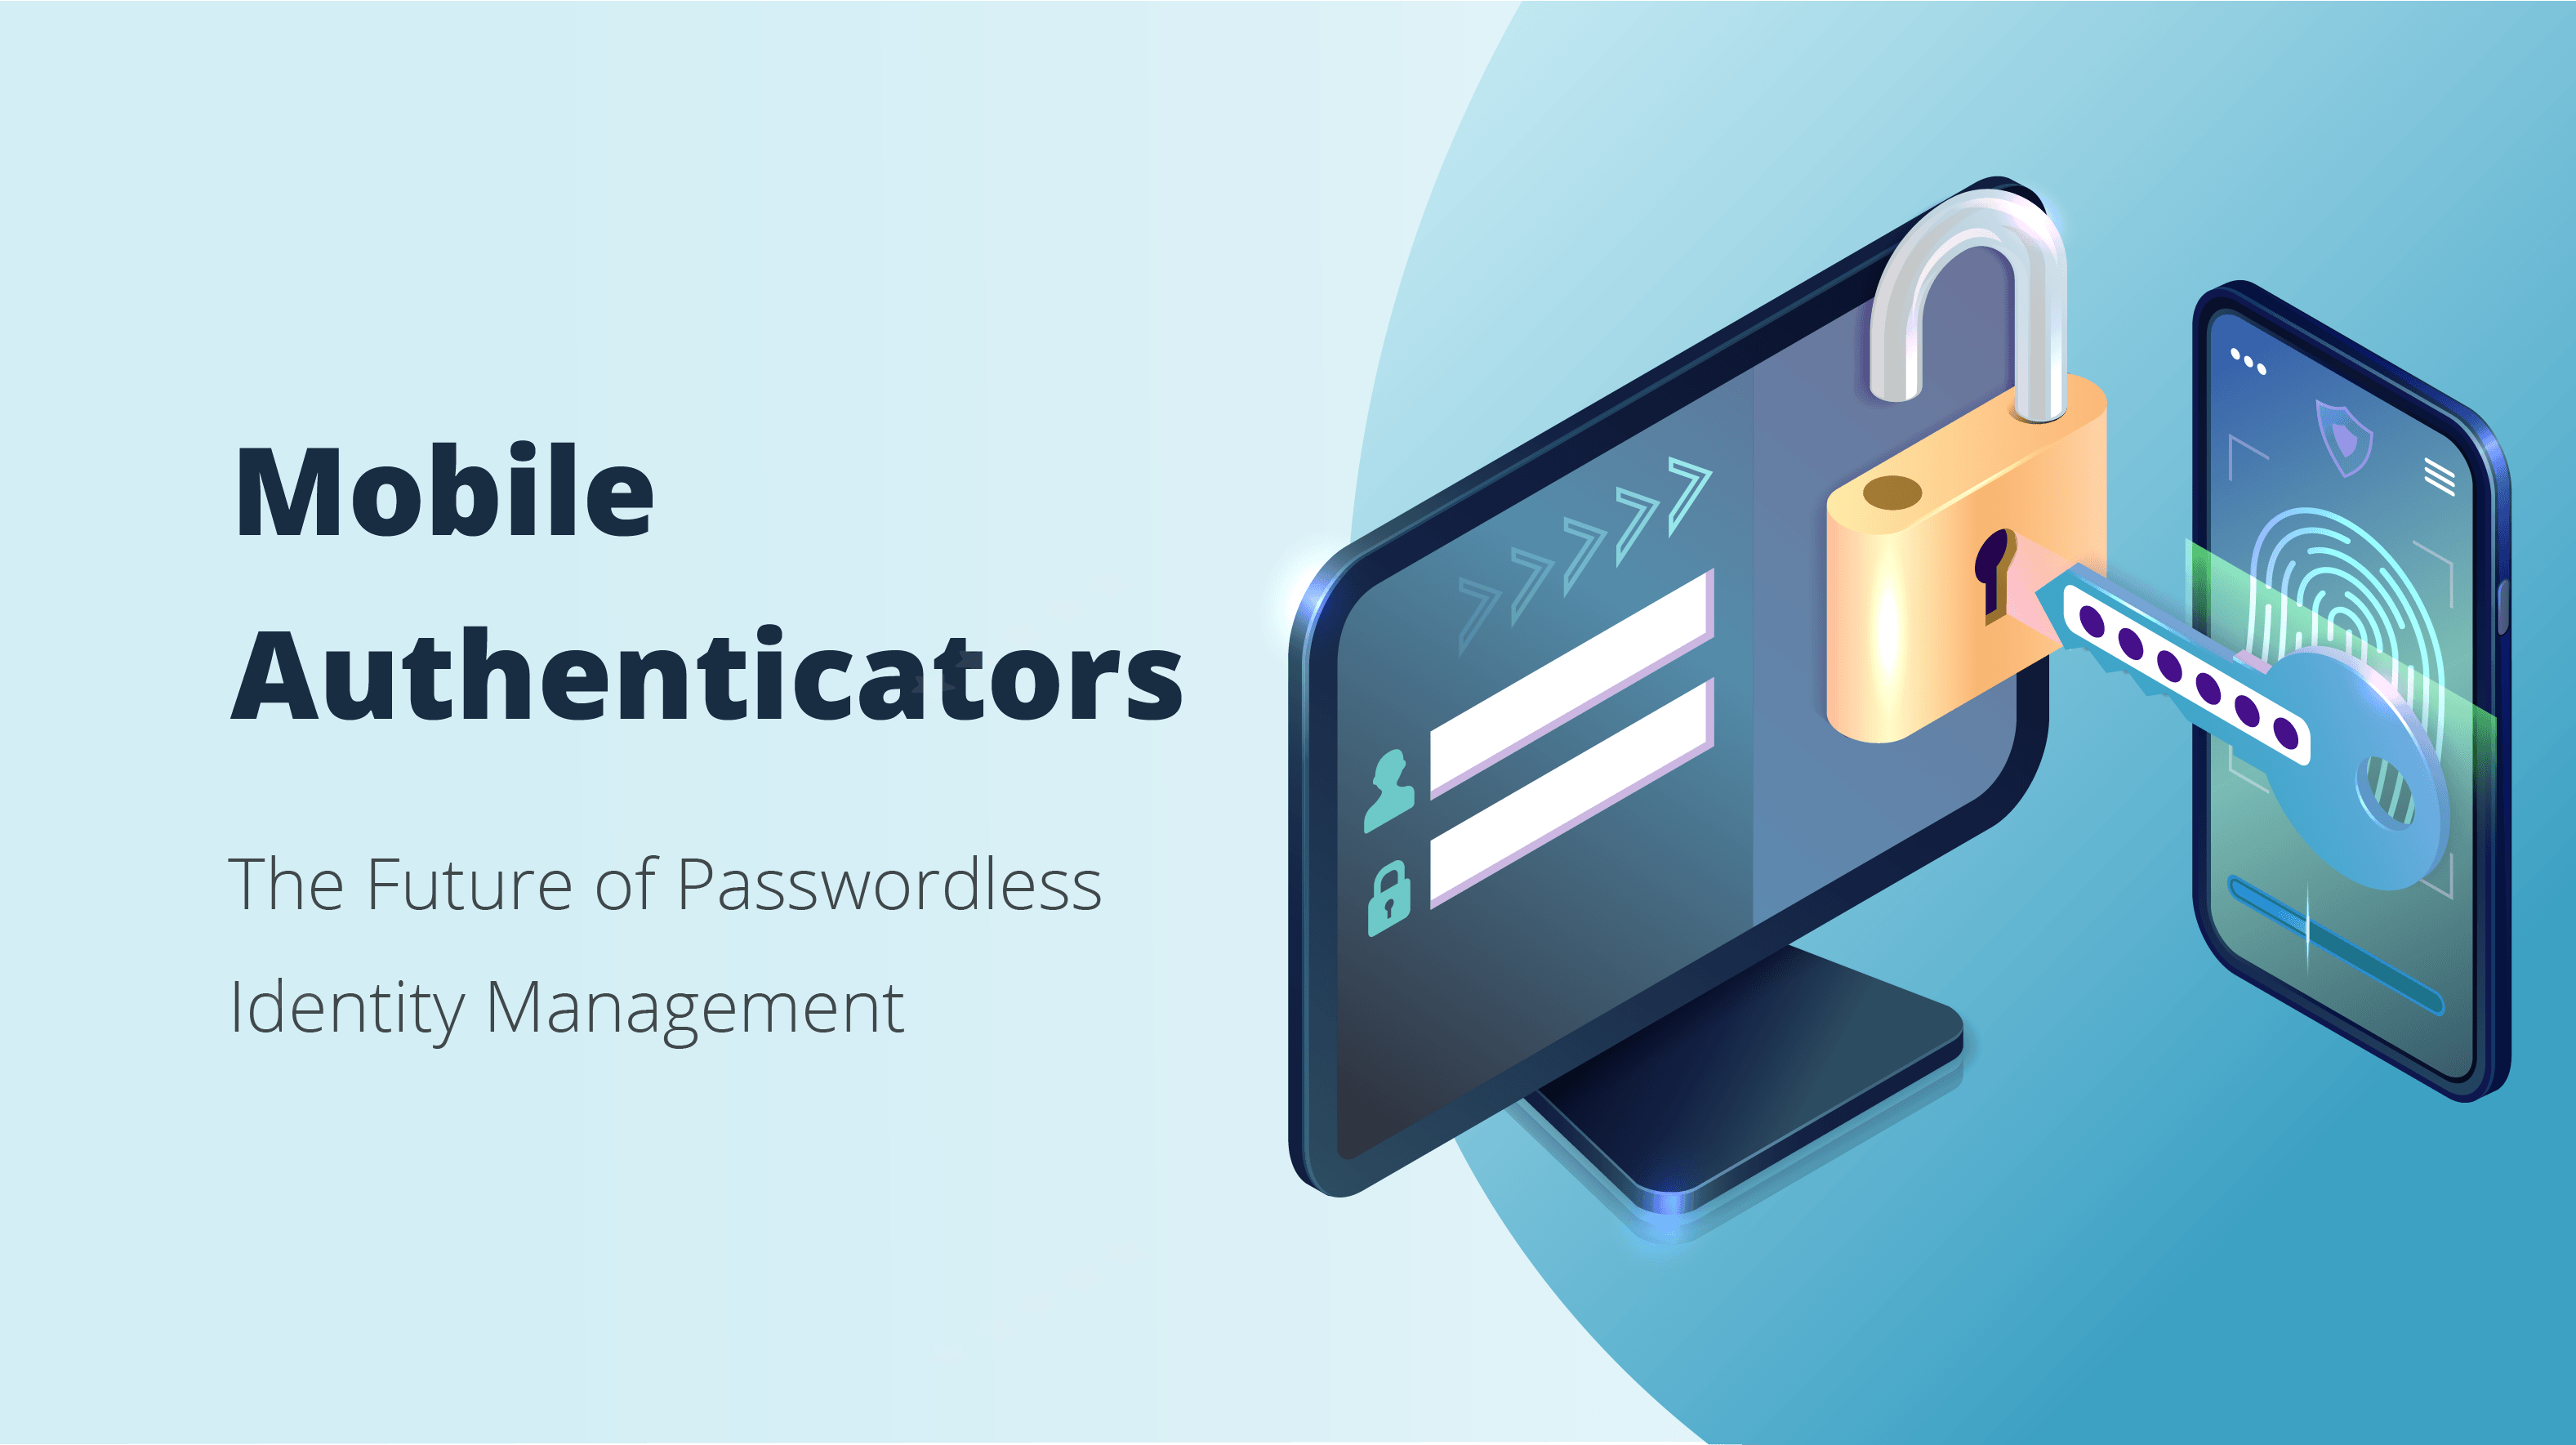 <b>Mobile Authentication and App Authenticators: The Future of Passwordless Identity Management</b>